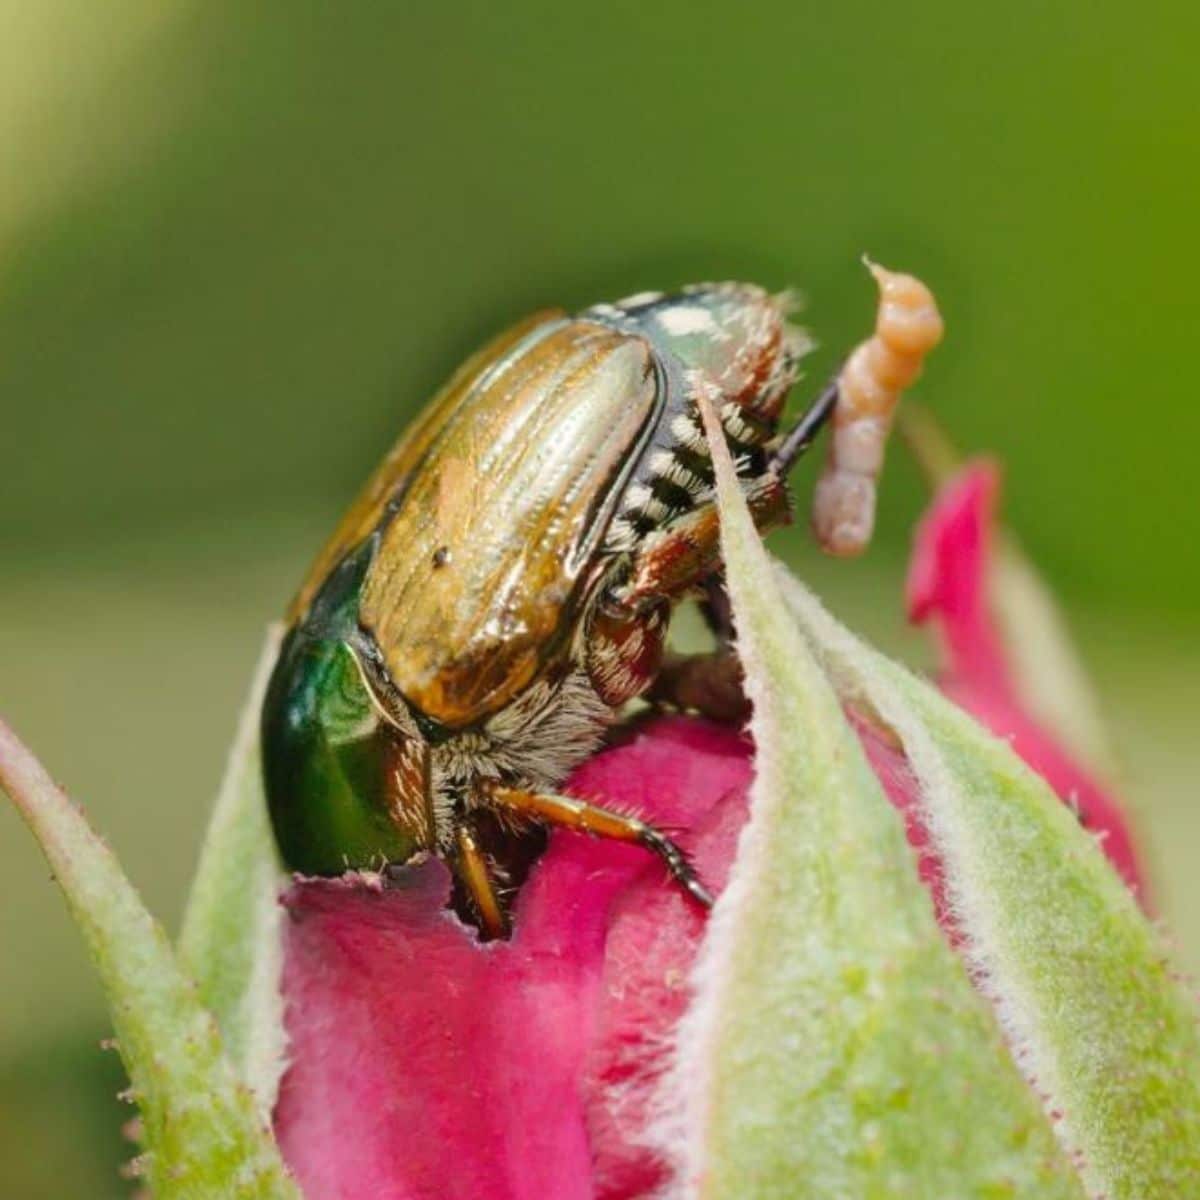 A japanese beetle on a rosebud.